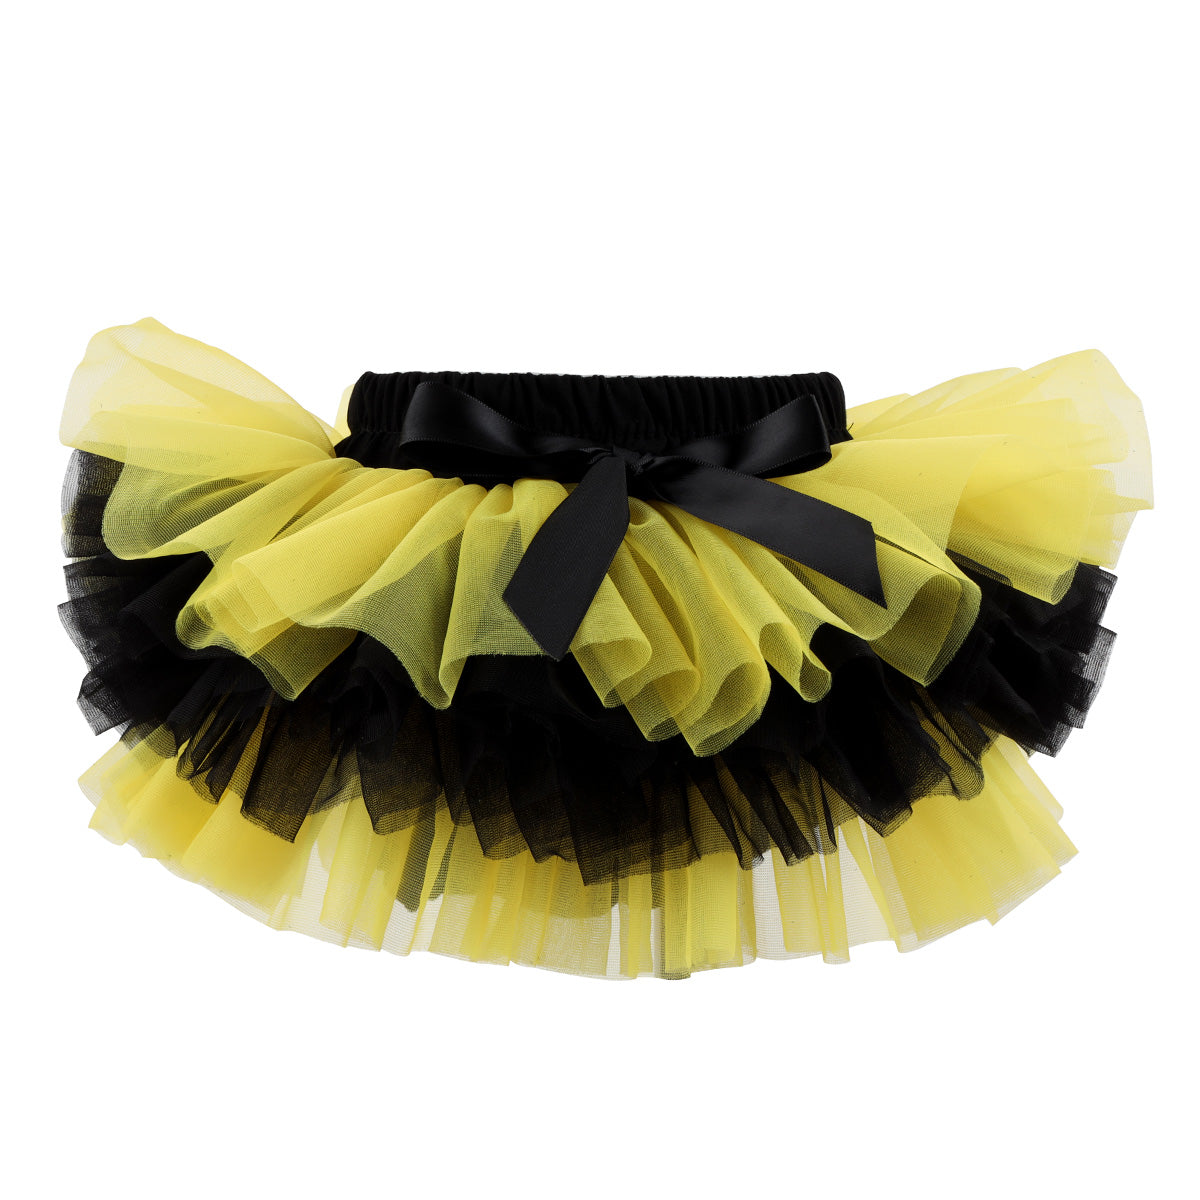 Baby girls bee TUTU skirt yellow - black - black - yellow fluffy soft with diaper cover